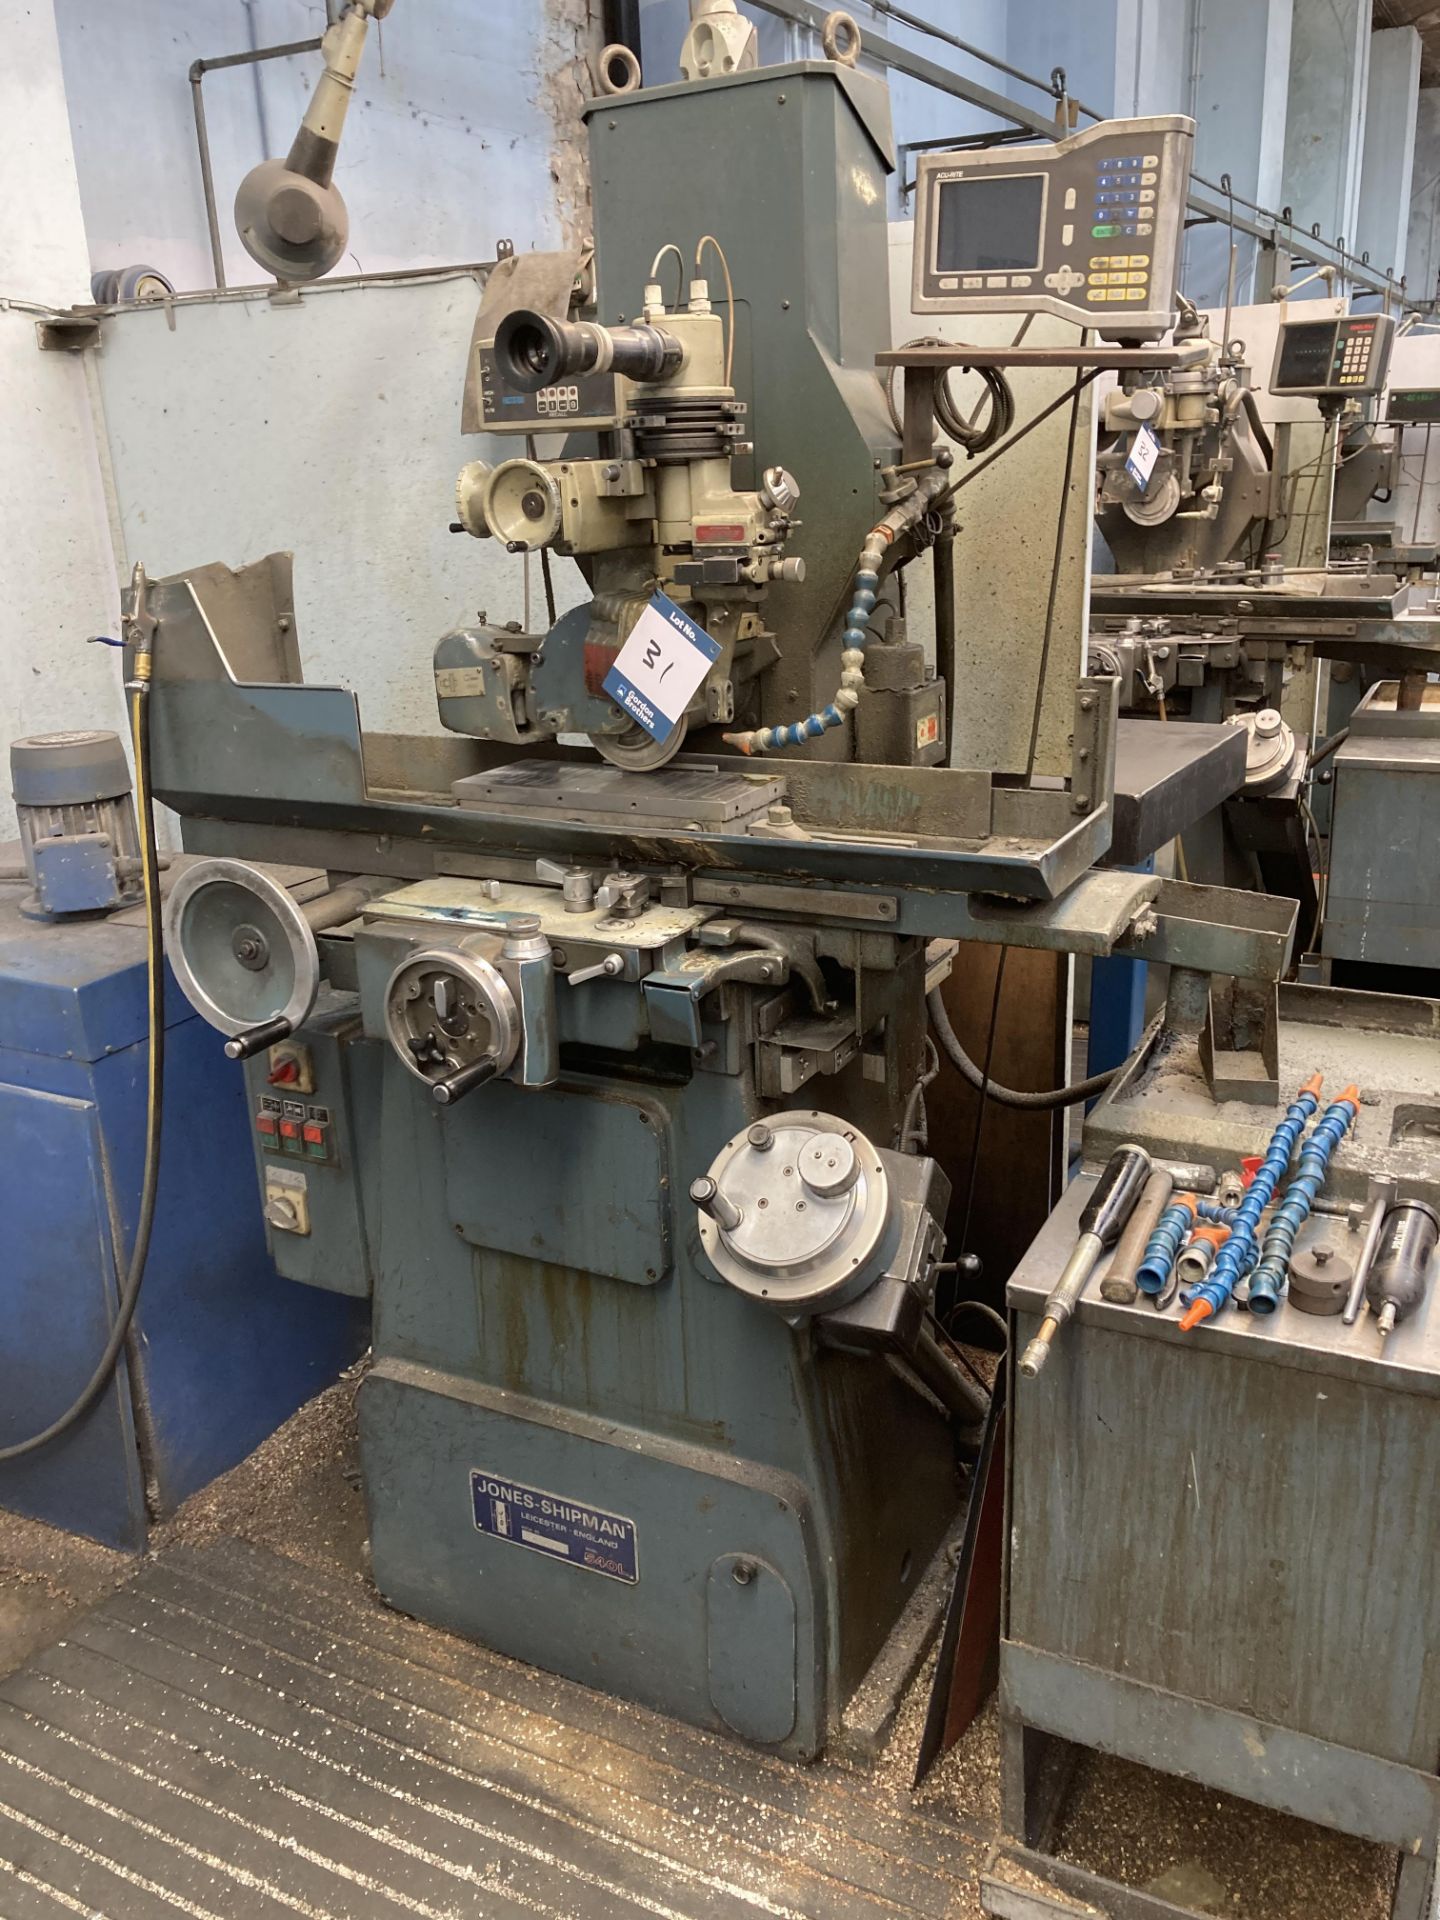 Jones & Shipman 540L horizontal surface grinding machine, Serial No. B075892, table size 26" x 6"